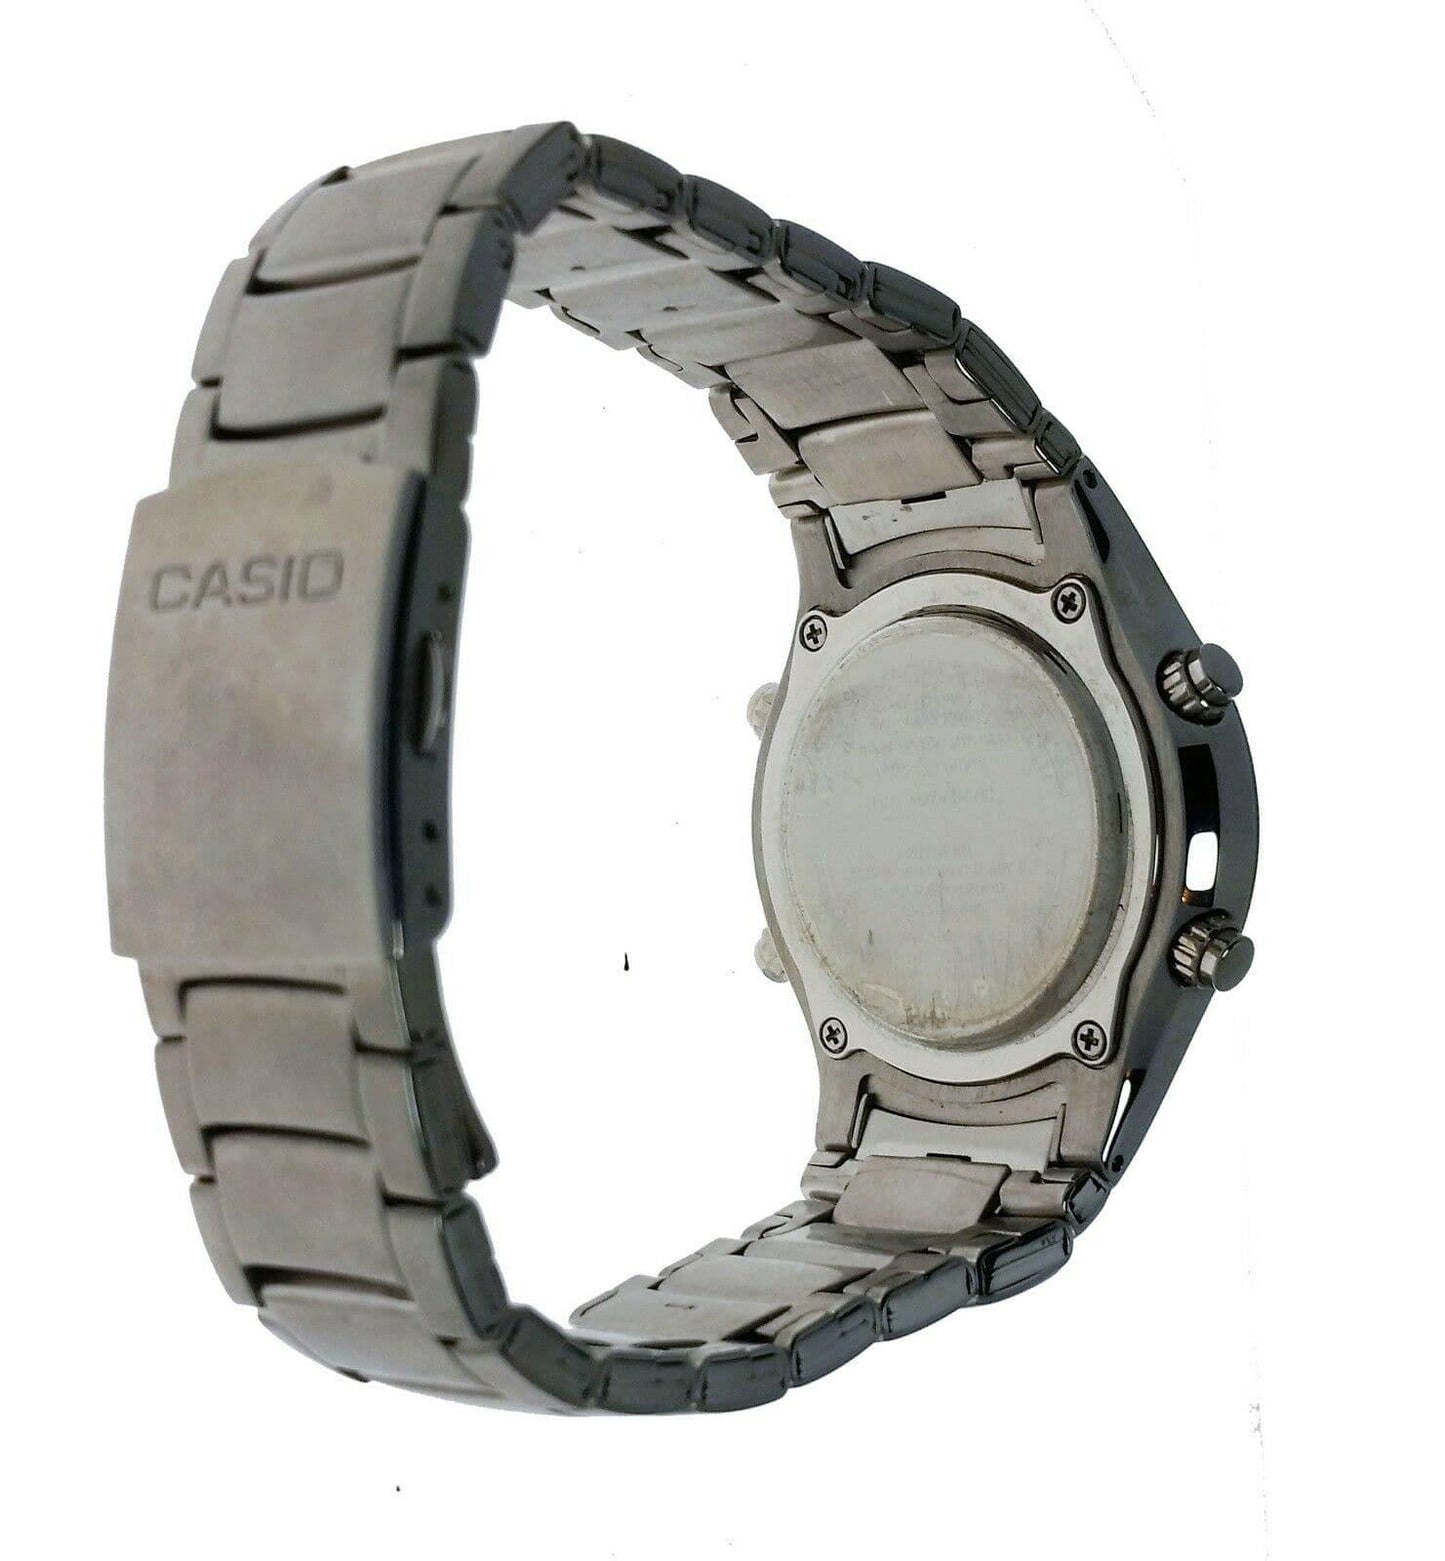 Casio Hunting Timer Moon Phase Anadigi Stainless Steel Watch AMW-701D-1AV - Diligence1International